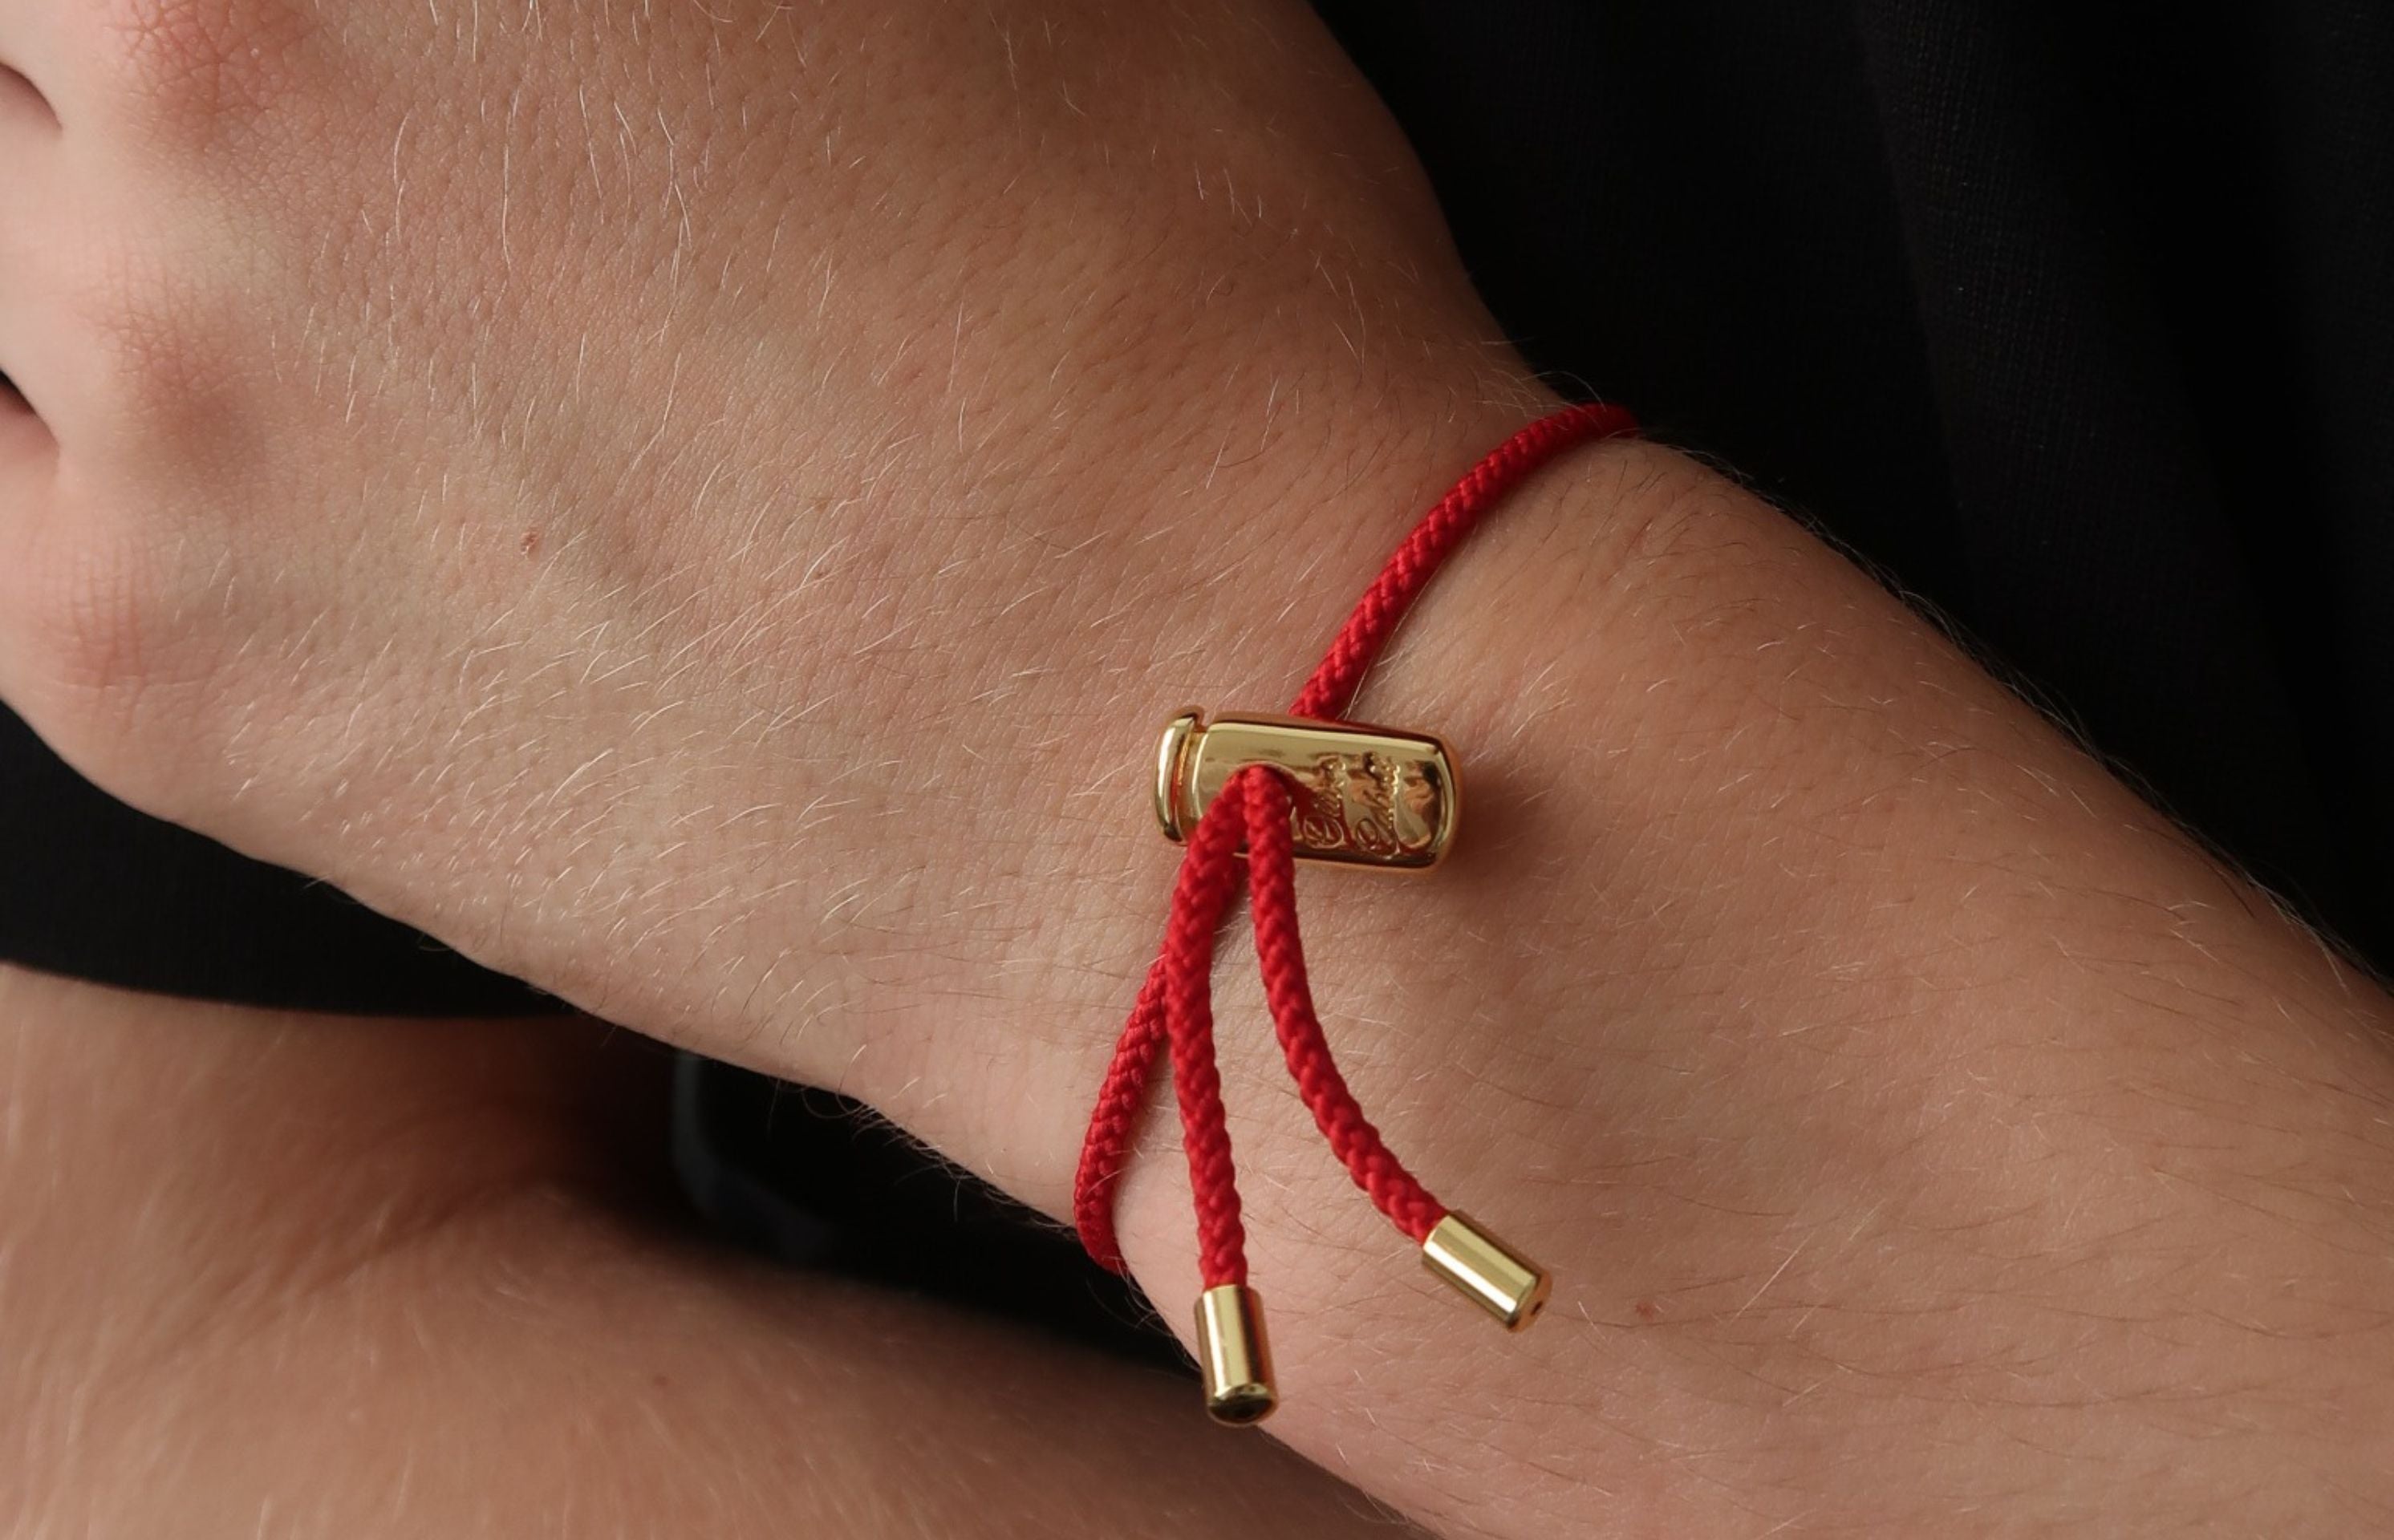 14k Gold Tube Red String Bracelet Silk Cord Red String Bracelet